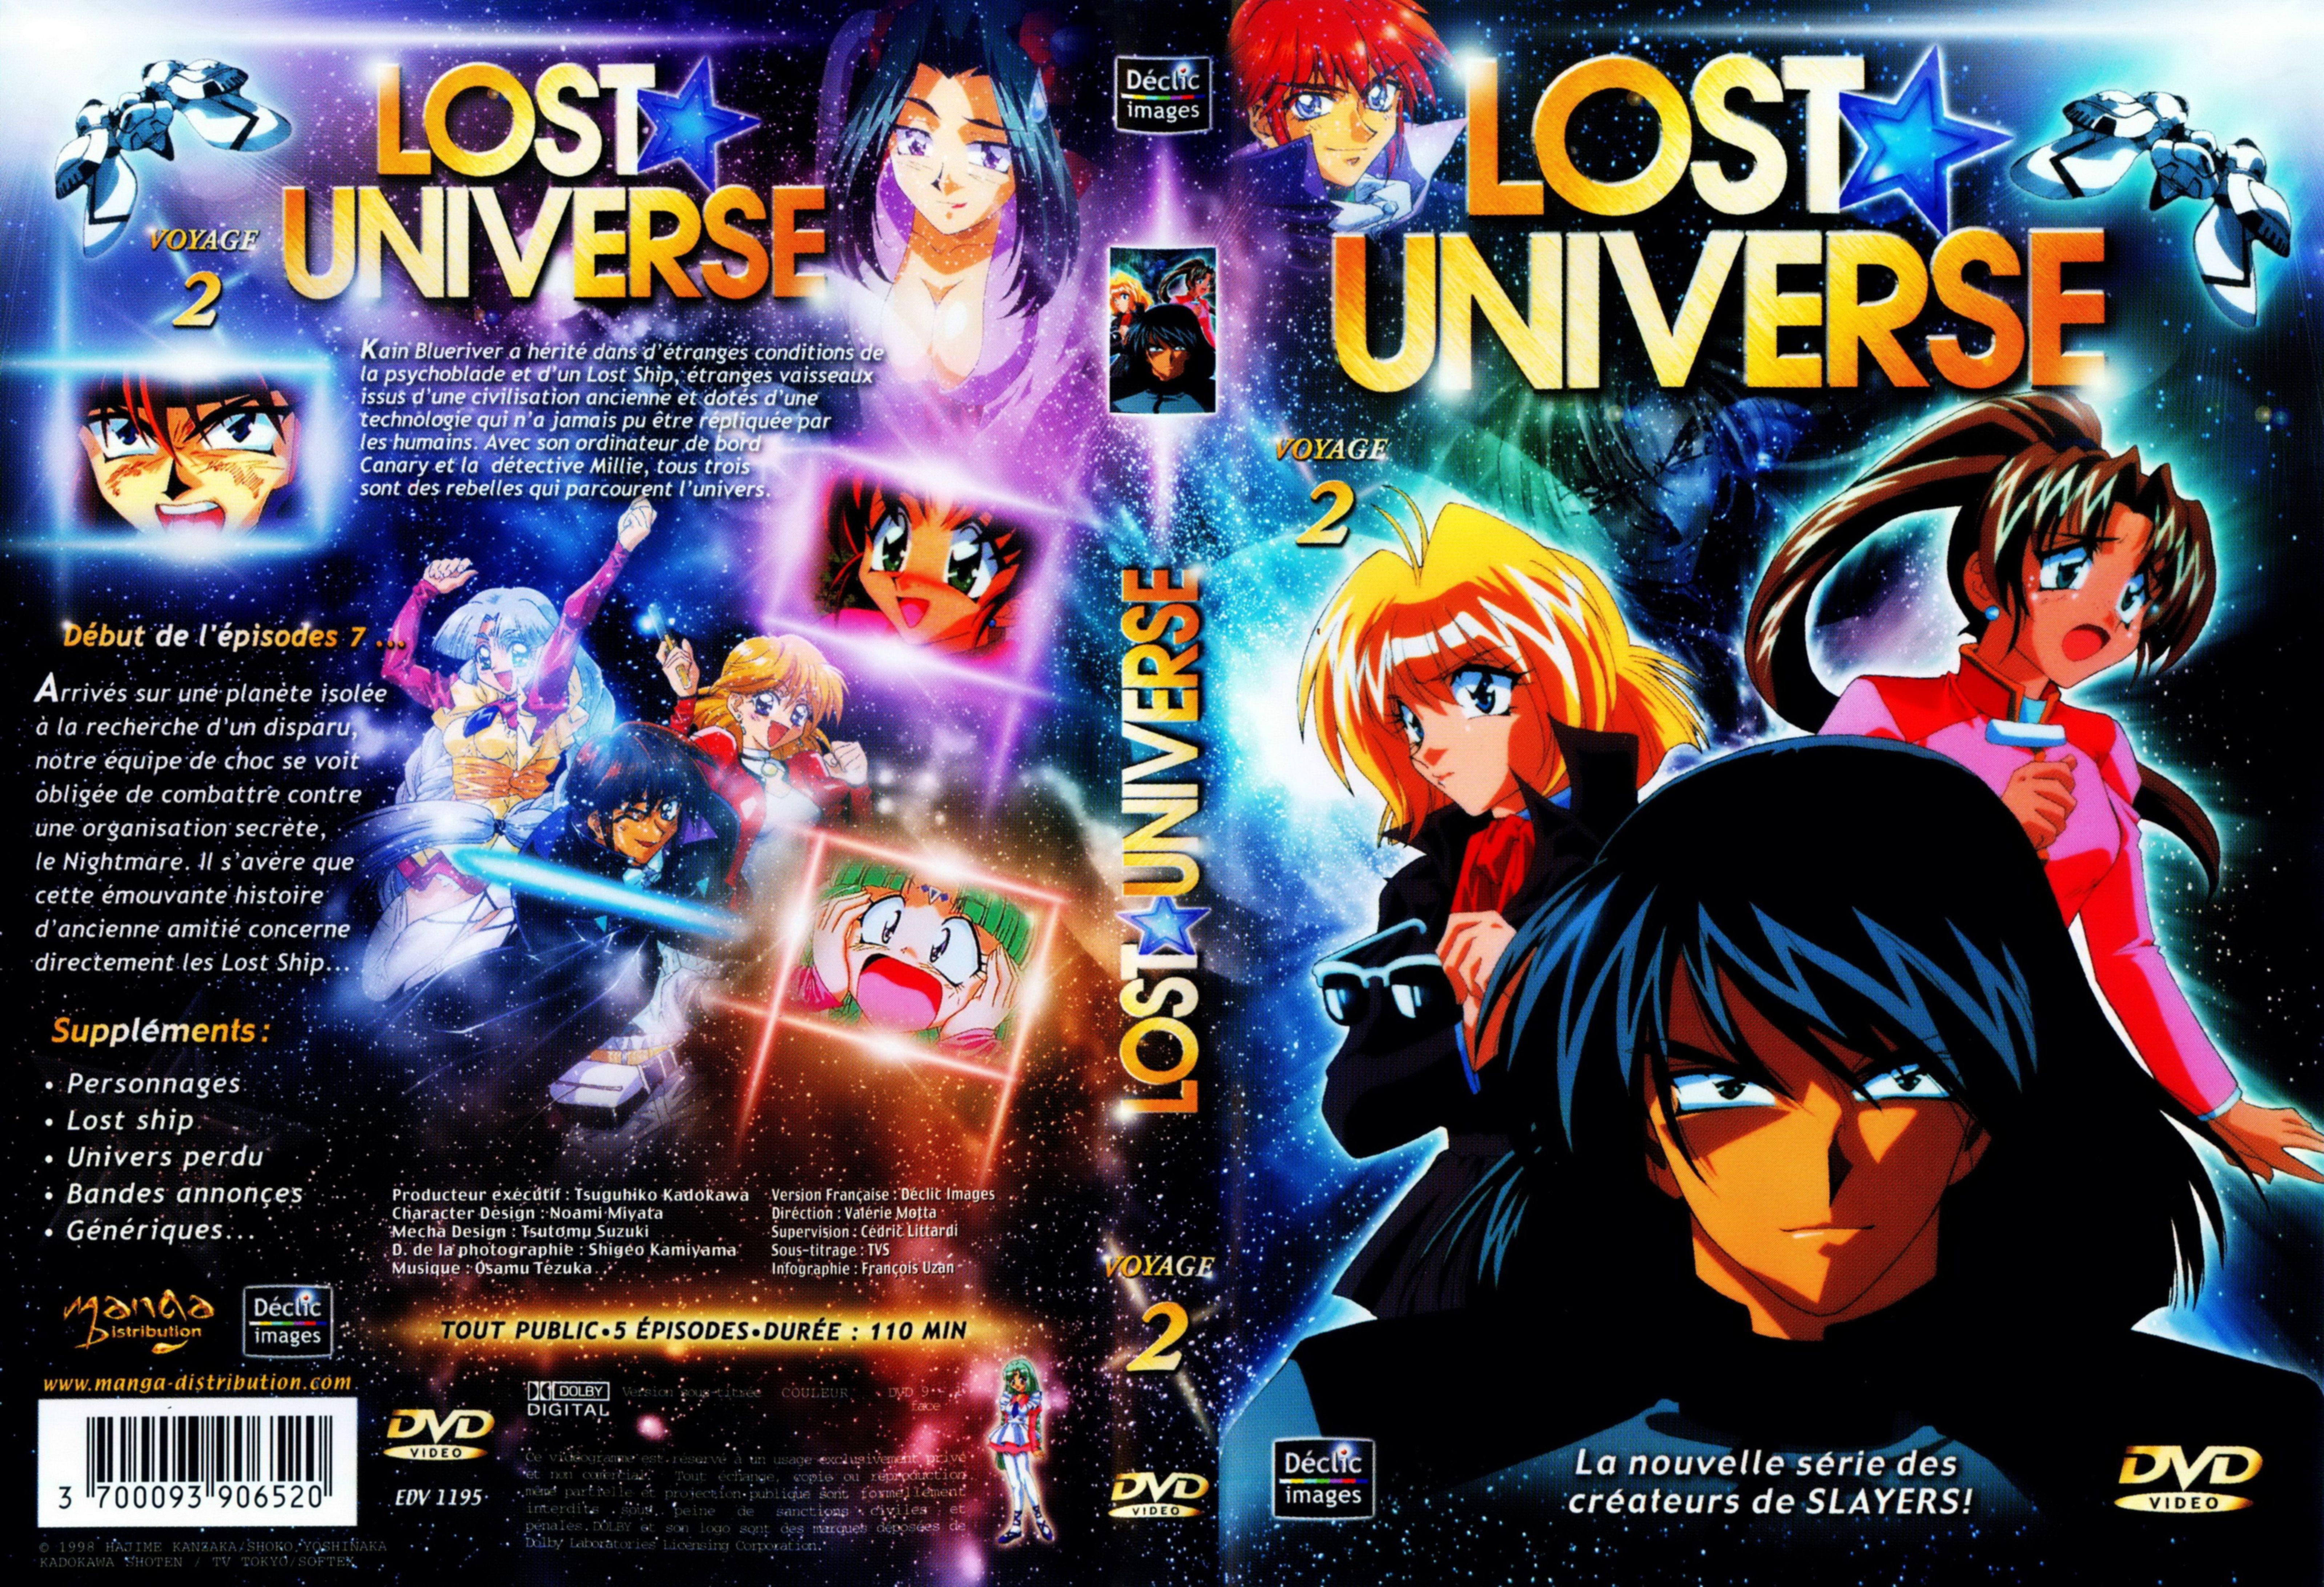 Jaquette DVD Lost universe vol 2